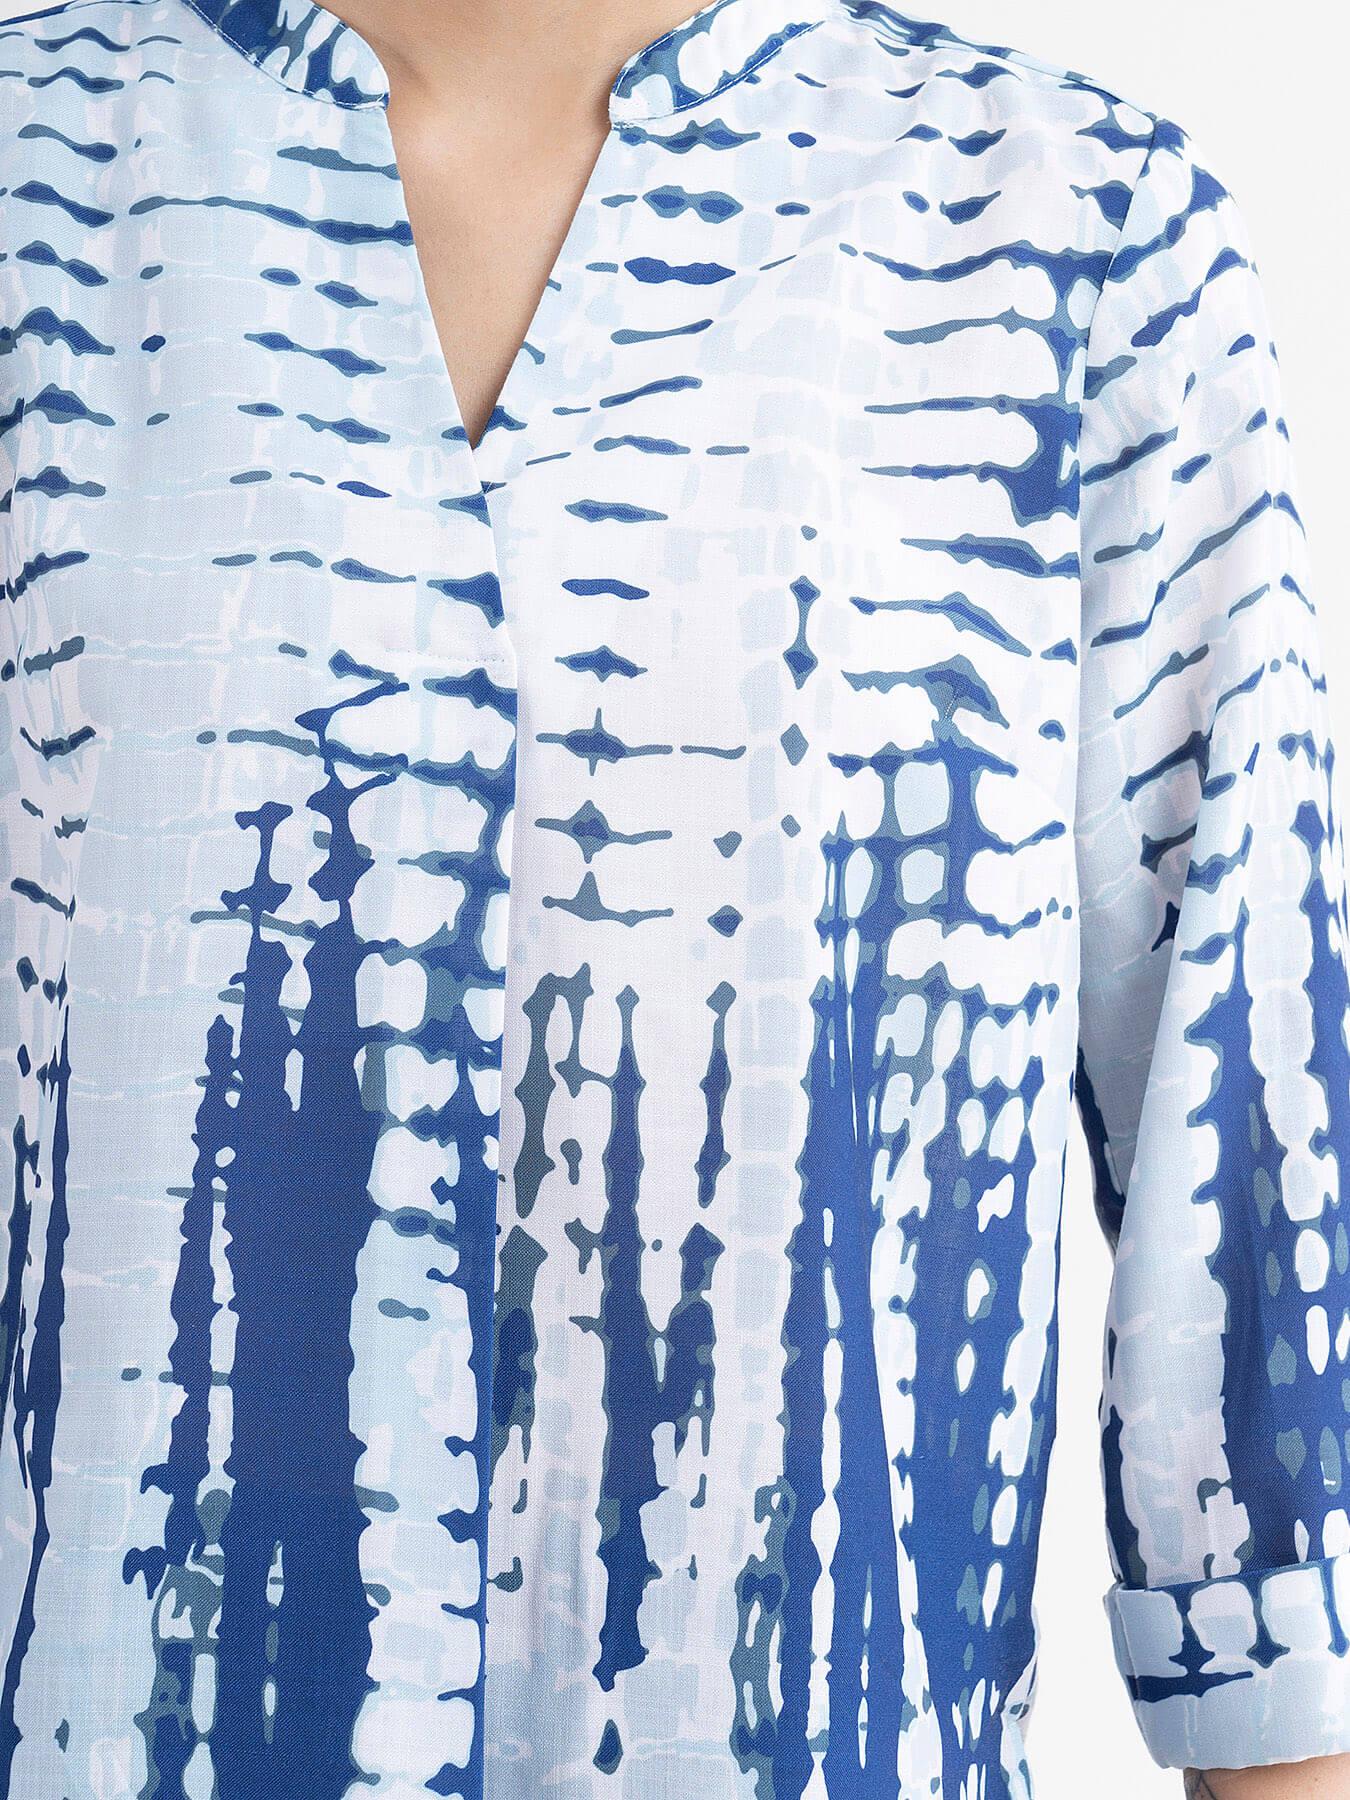 Shibori Print Top - White And Blue| Formal Tops